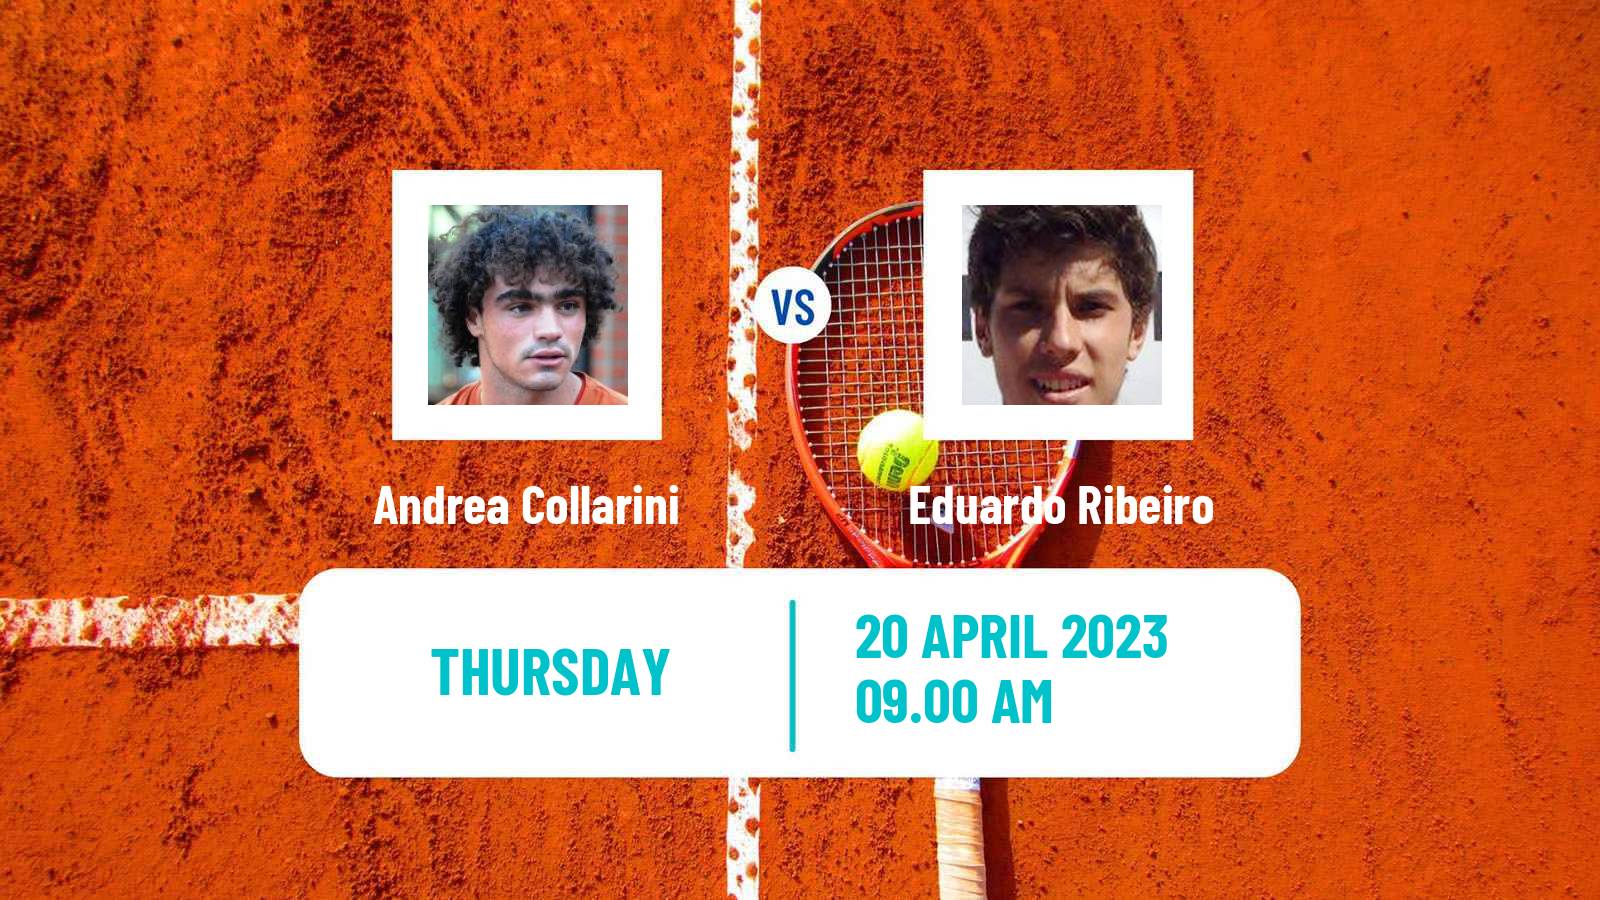 Tennis ATP Challenger Andrea Collarini - Eduardo Ribeiro